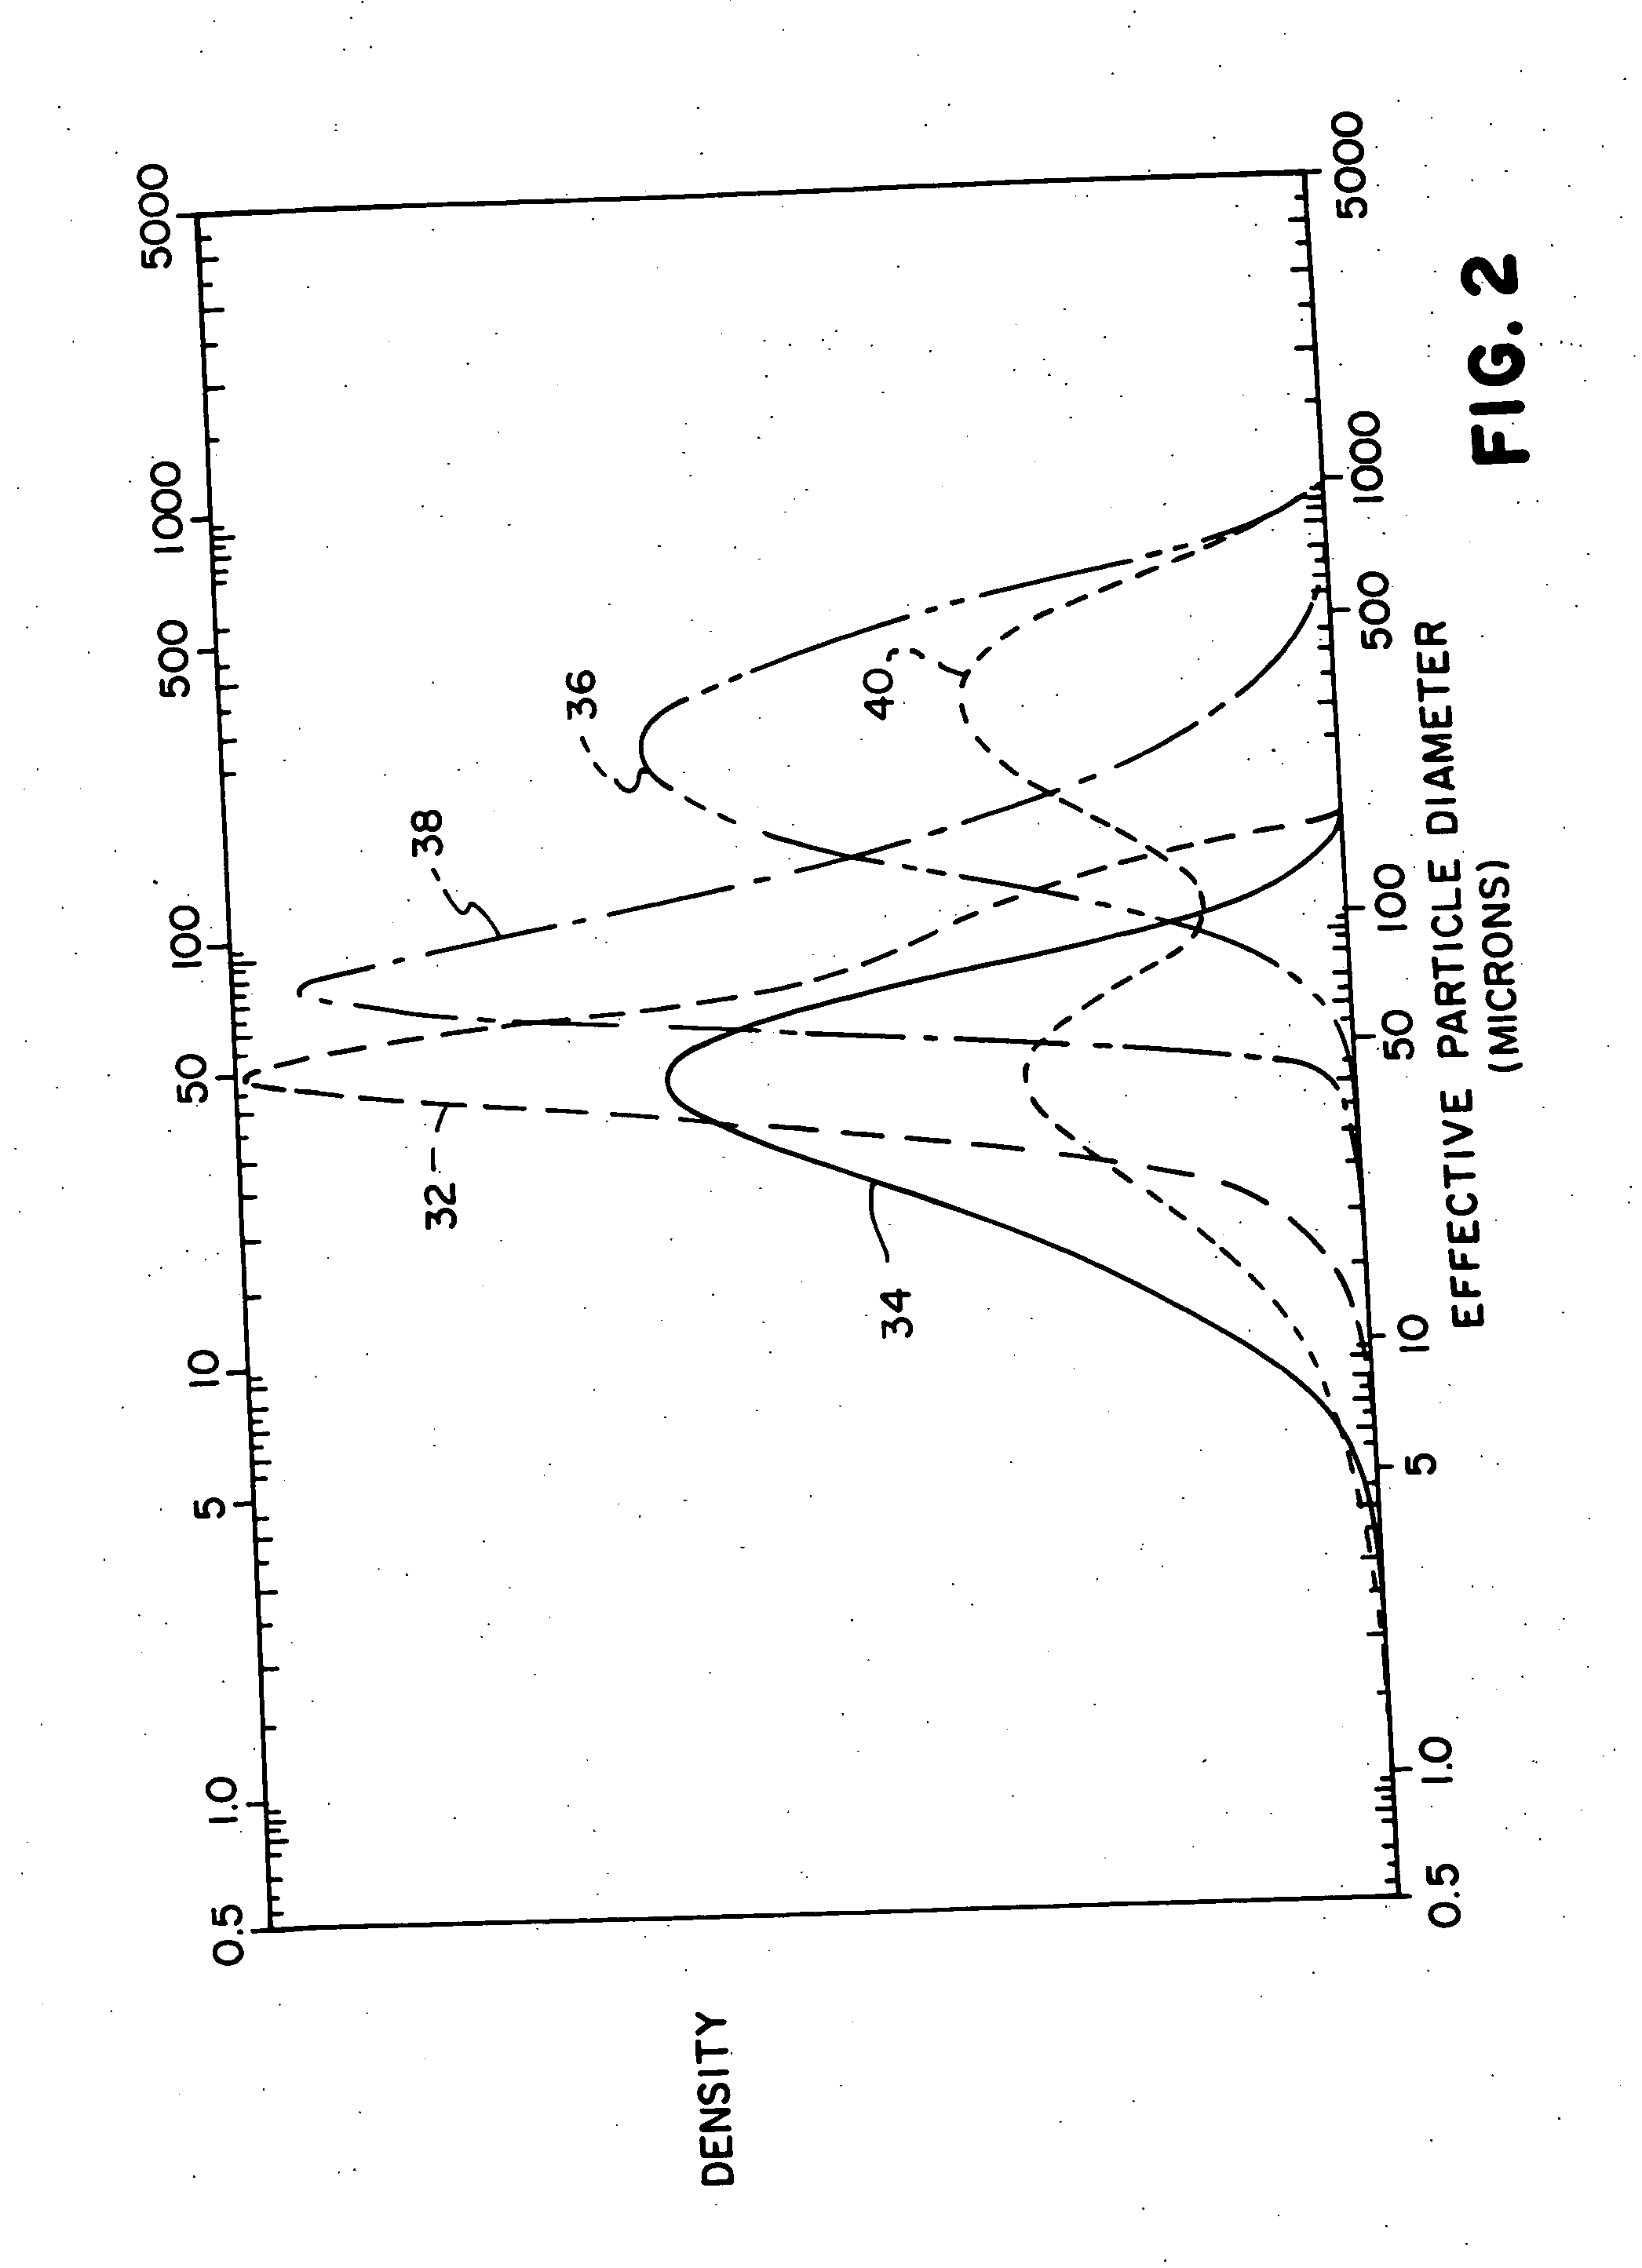 Electrode having multi-modal distribution of zinc-based particles